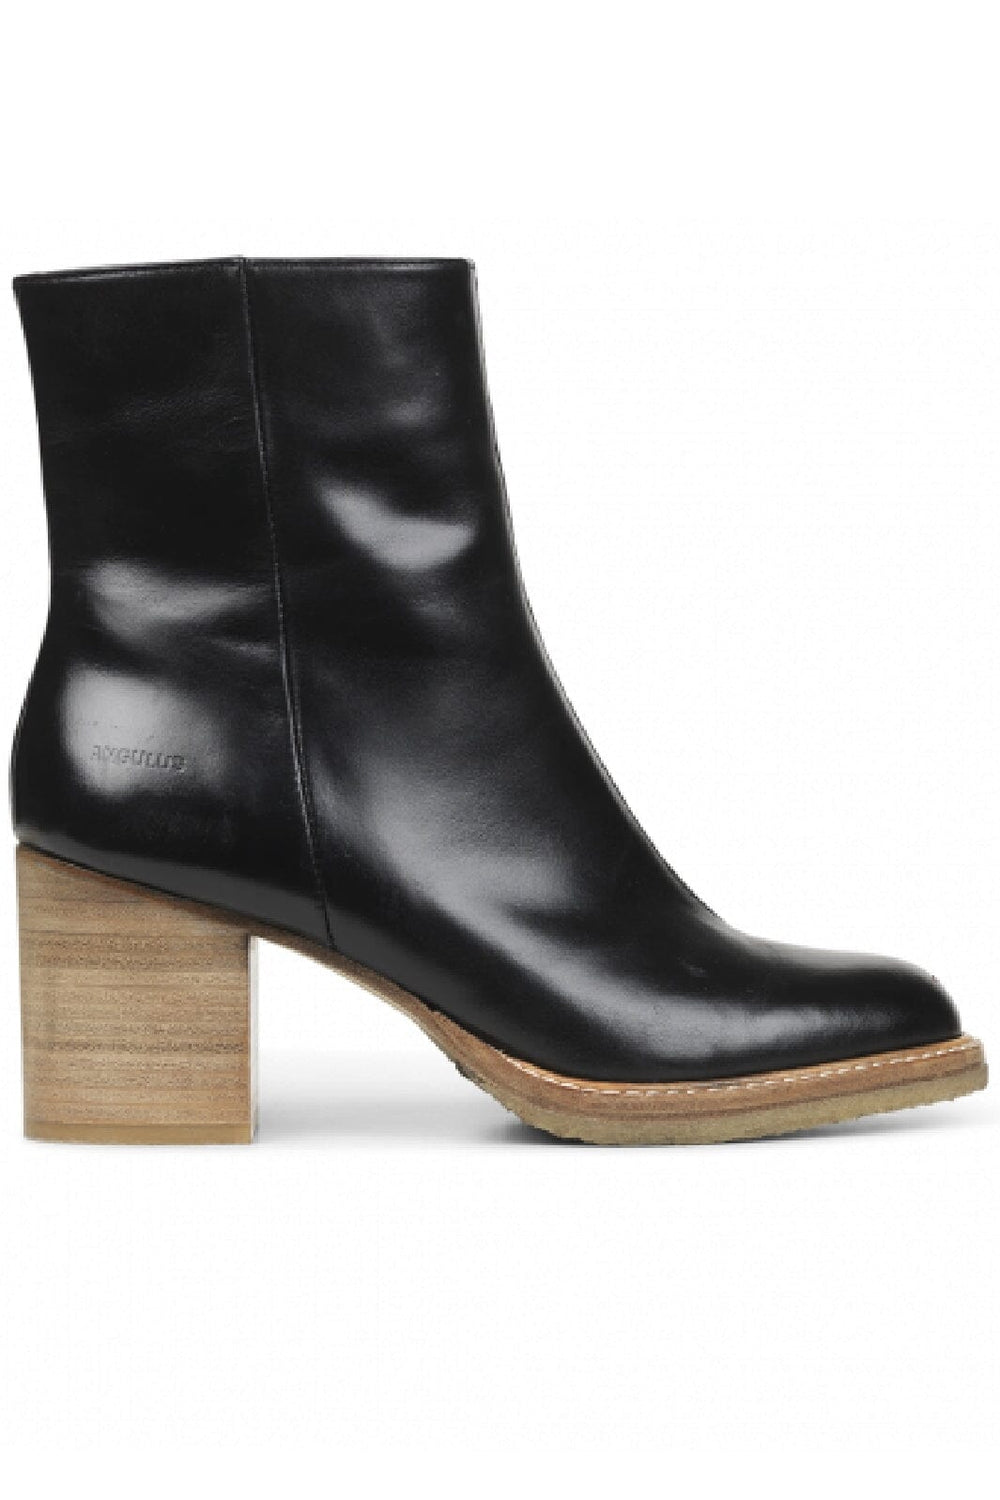 Angulus - Block heel boot with zipper - 8470 Støvletter 